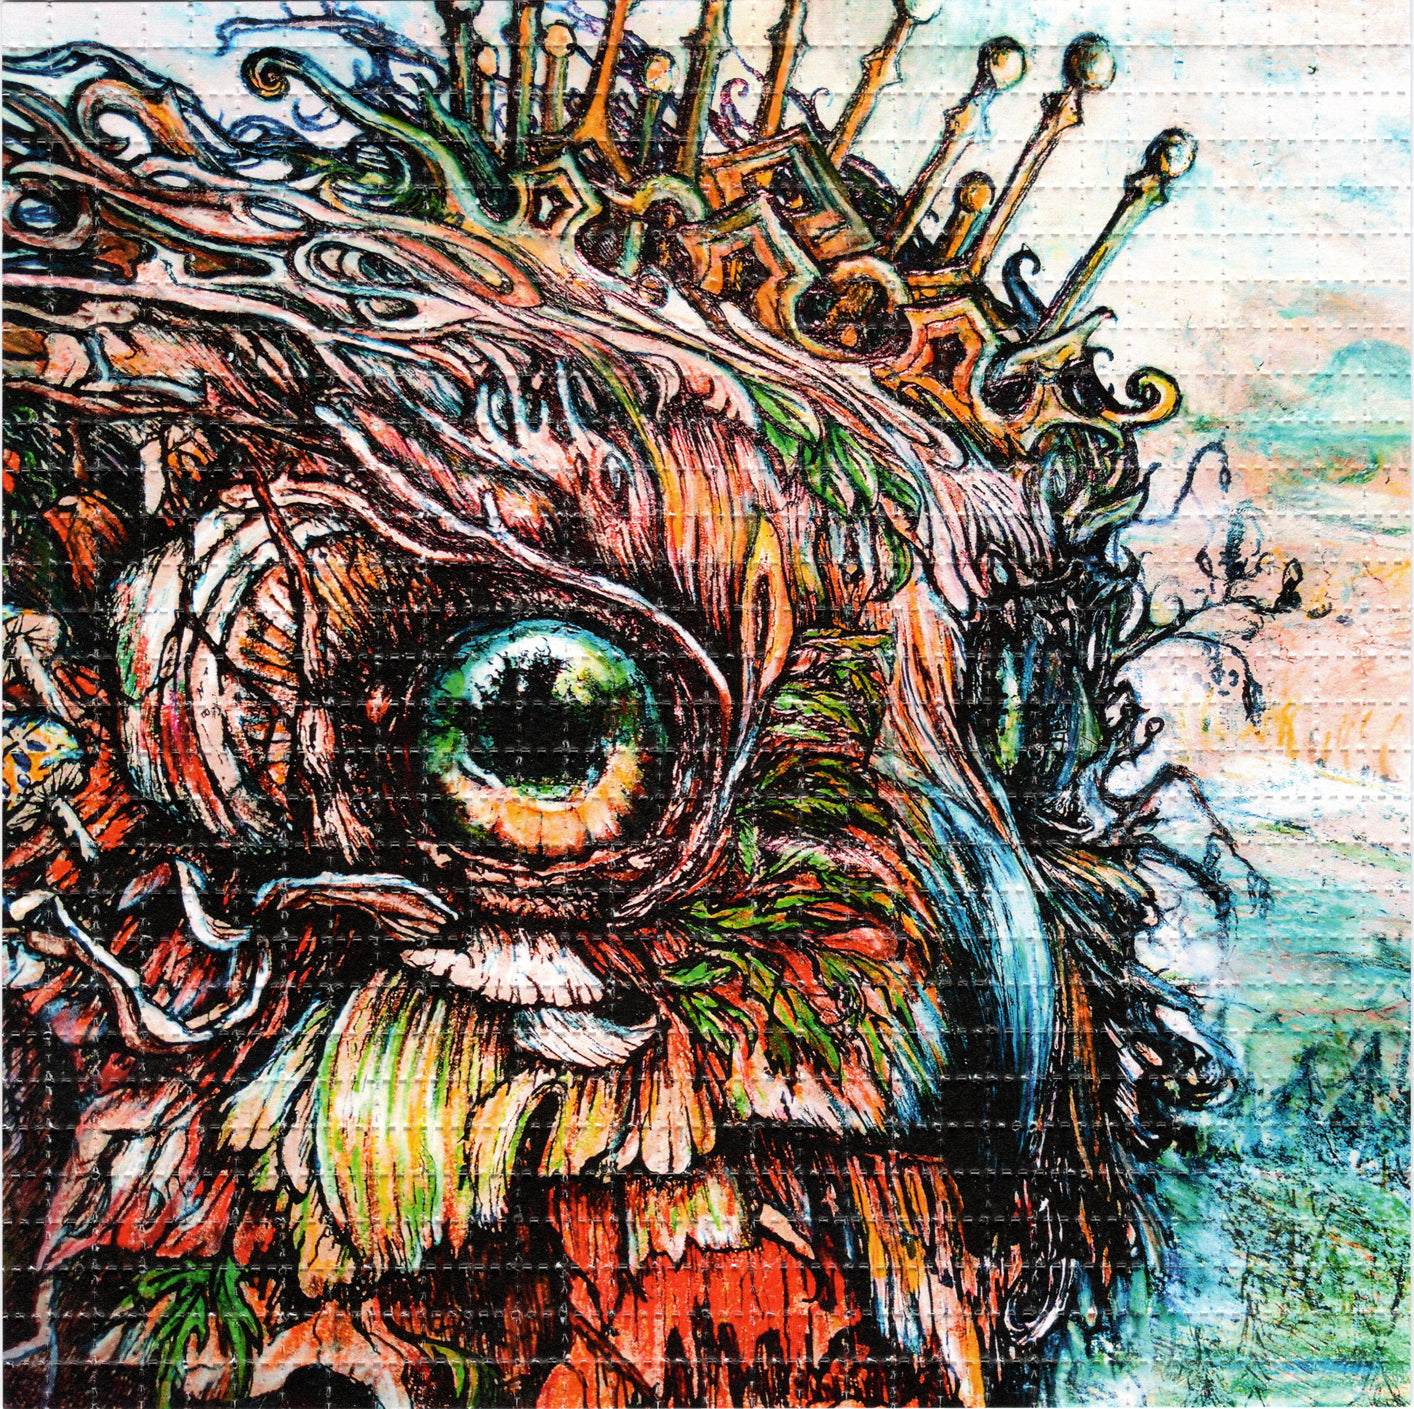 Owl-sley by Kuhmali Signed Limited Edition LSD blotter art print